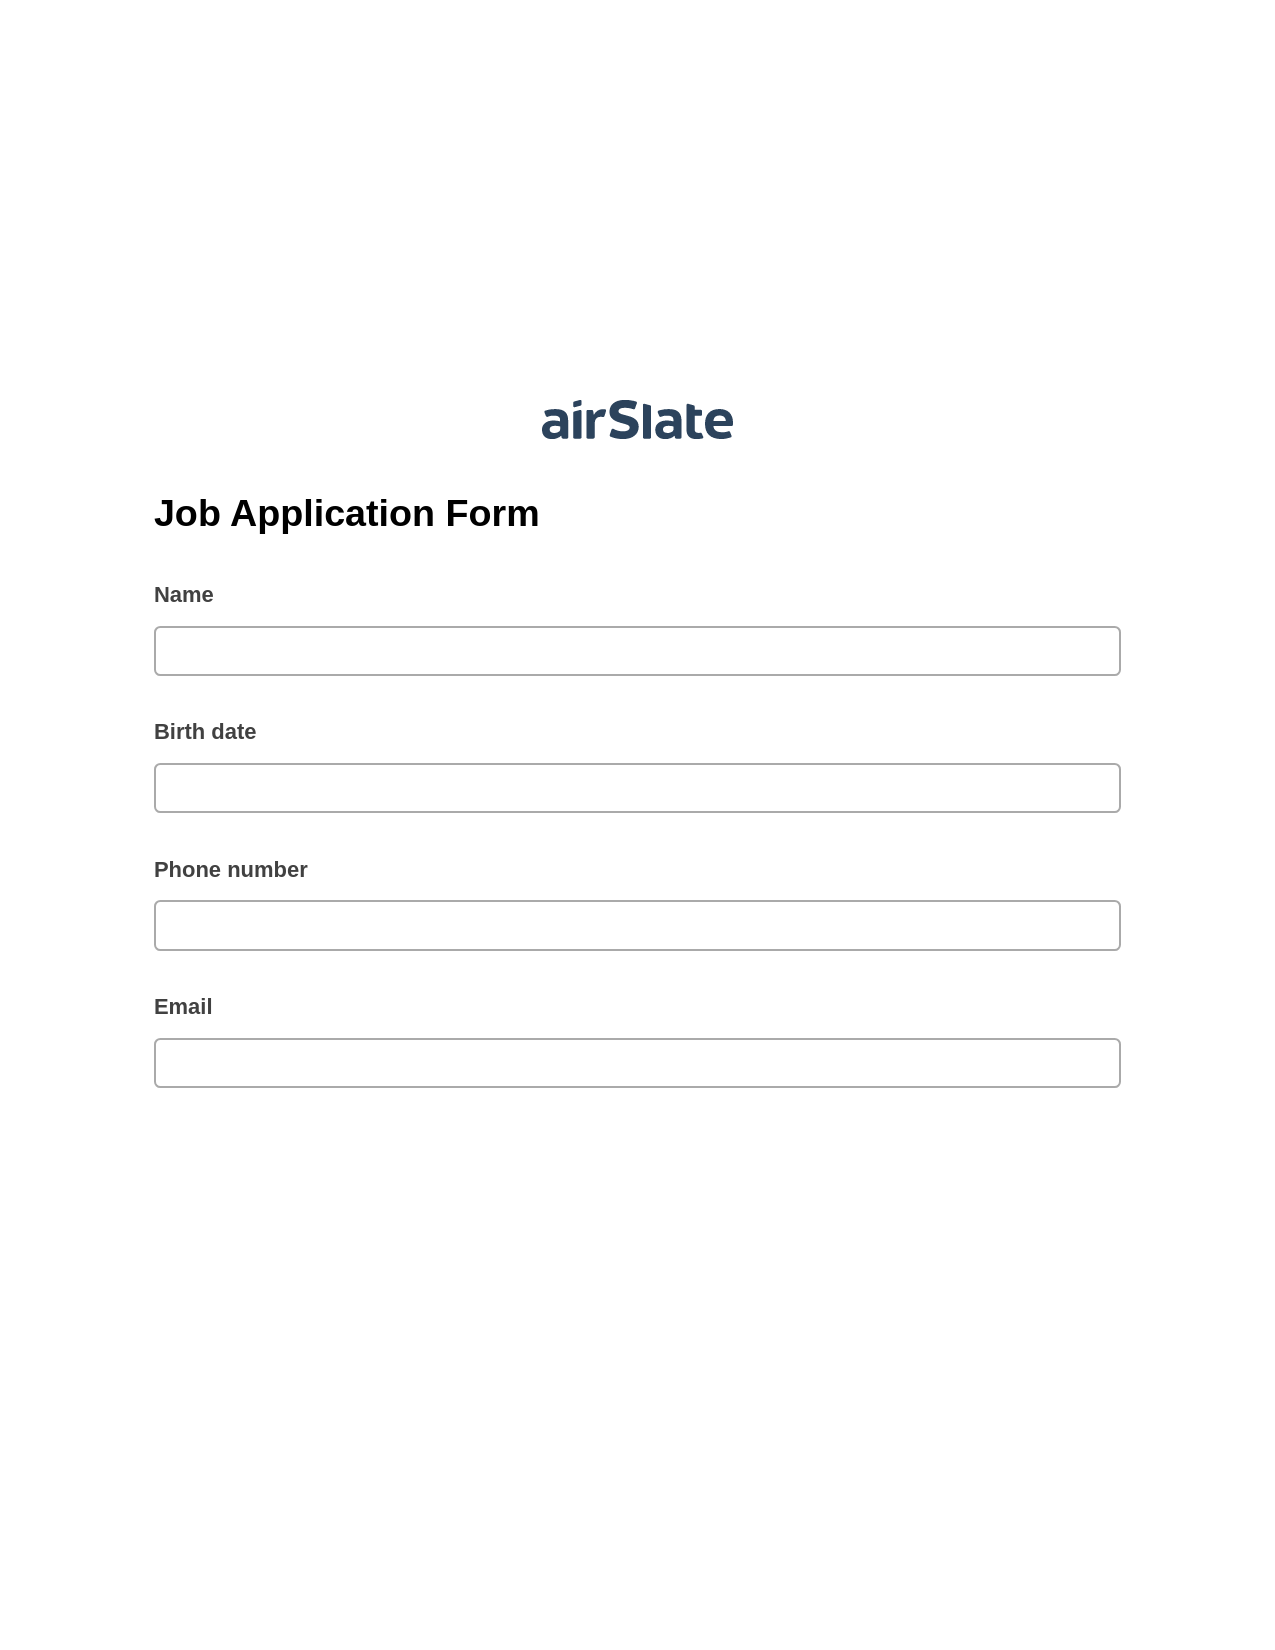 Multirole Job Application Form Pre-fill from MySQL Dropdown Options Bot, Mailchimp send Campaign bot, Export to MySQL Bot